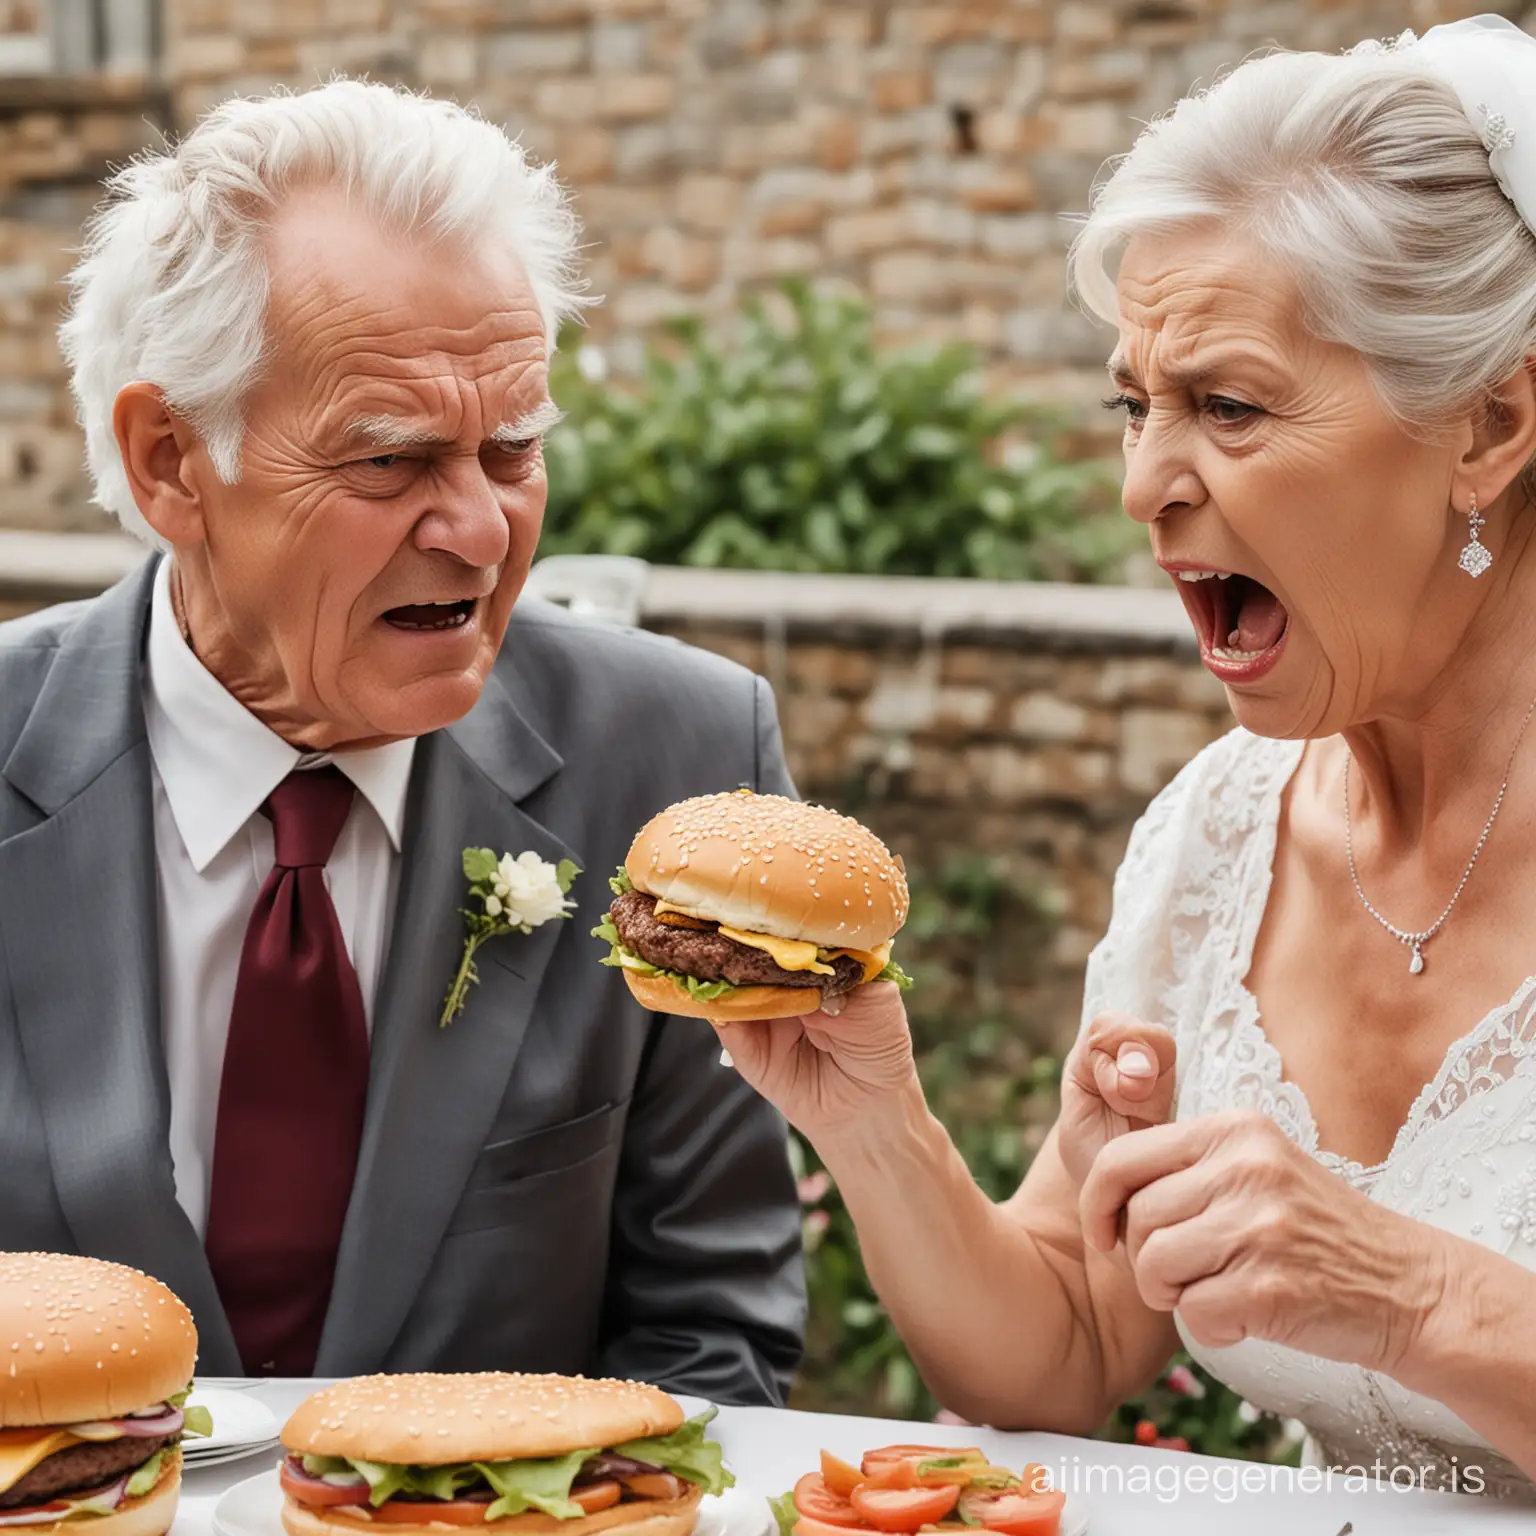 Elderly-Couple-Arguing-over-Burger-at-Wedding-Reception